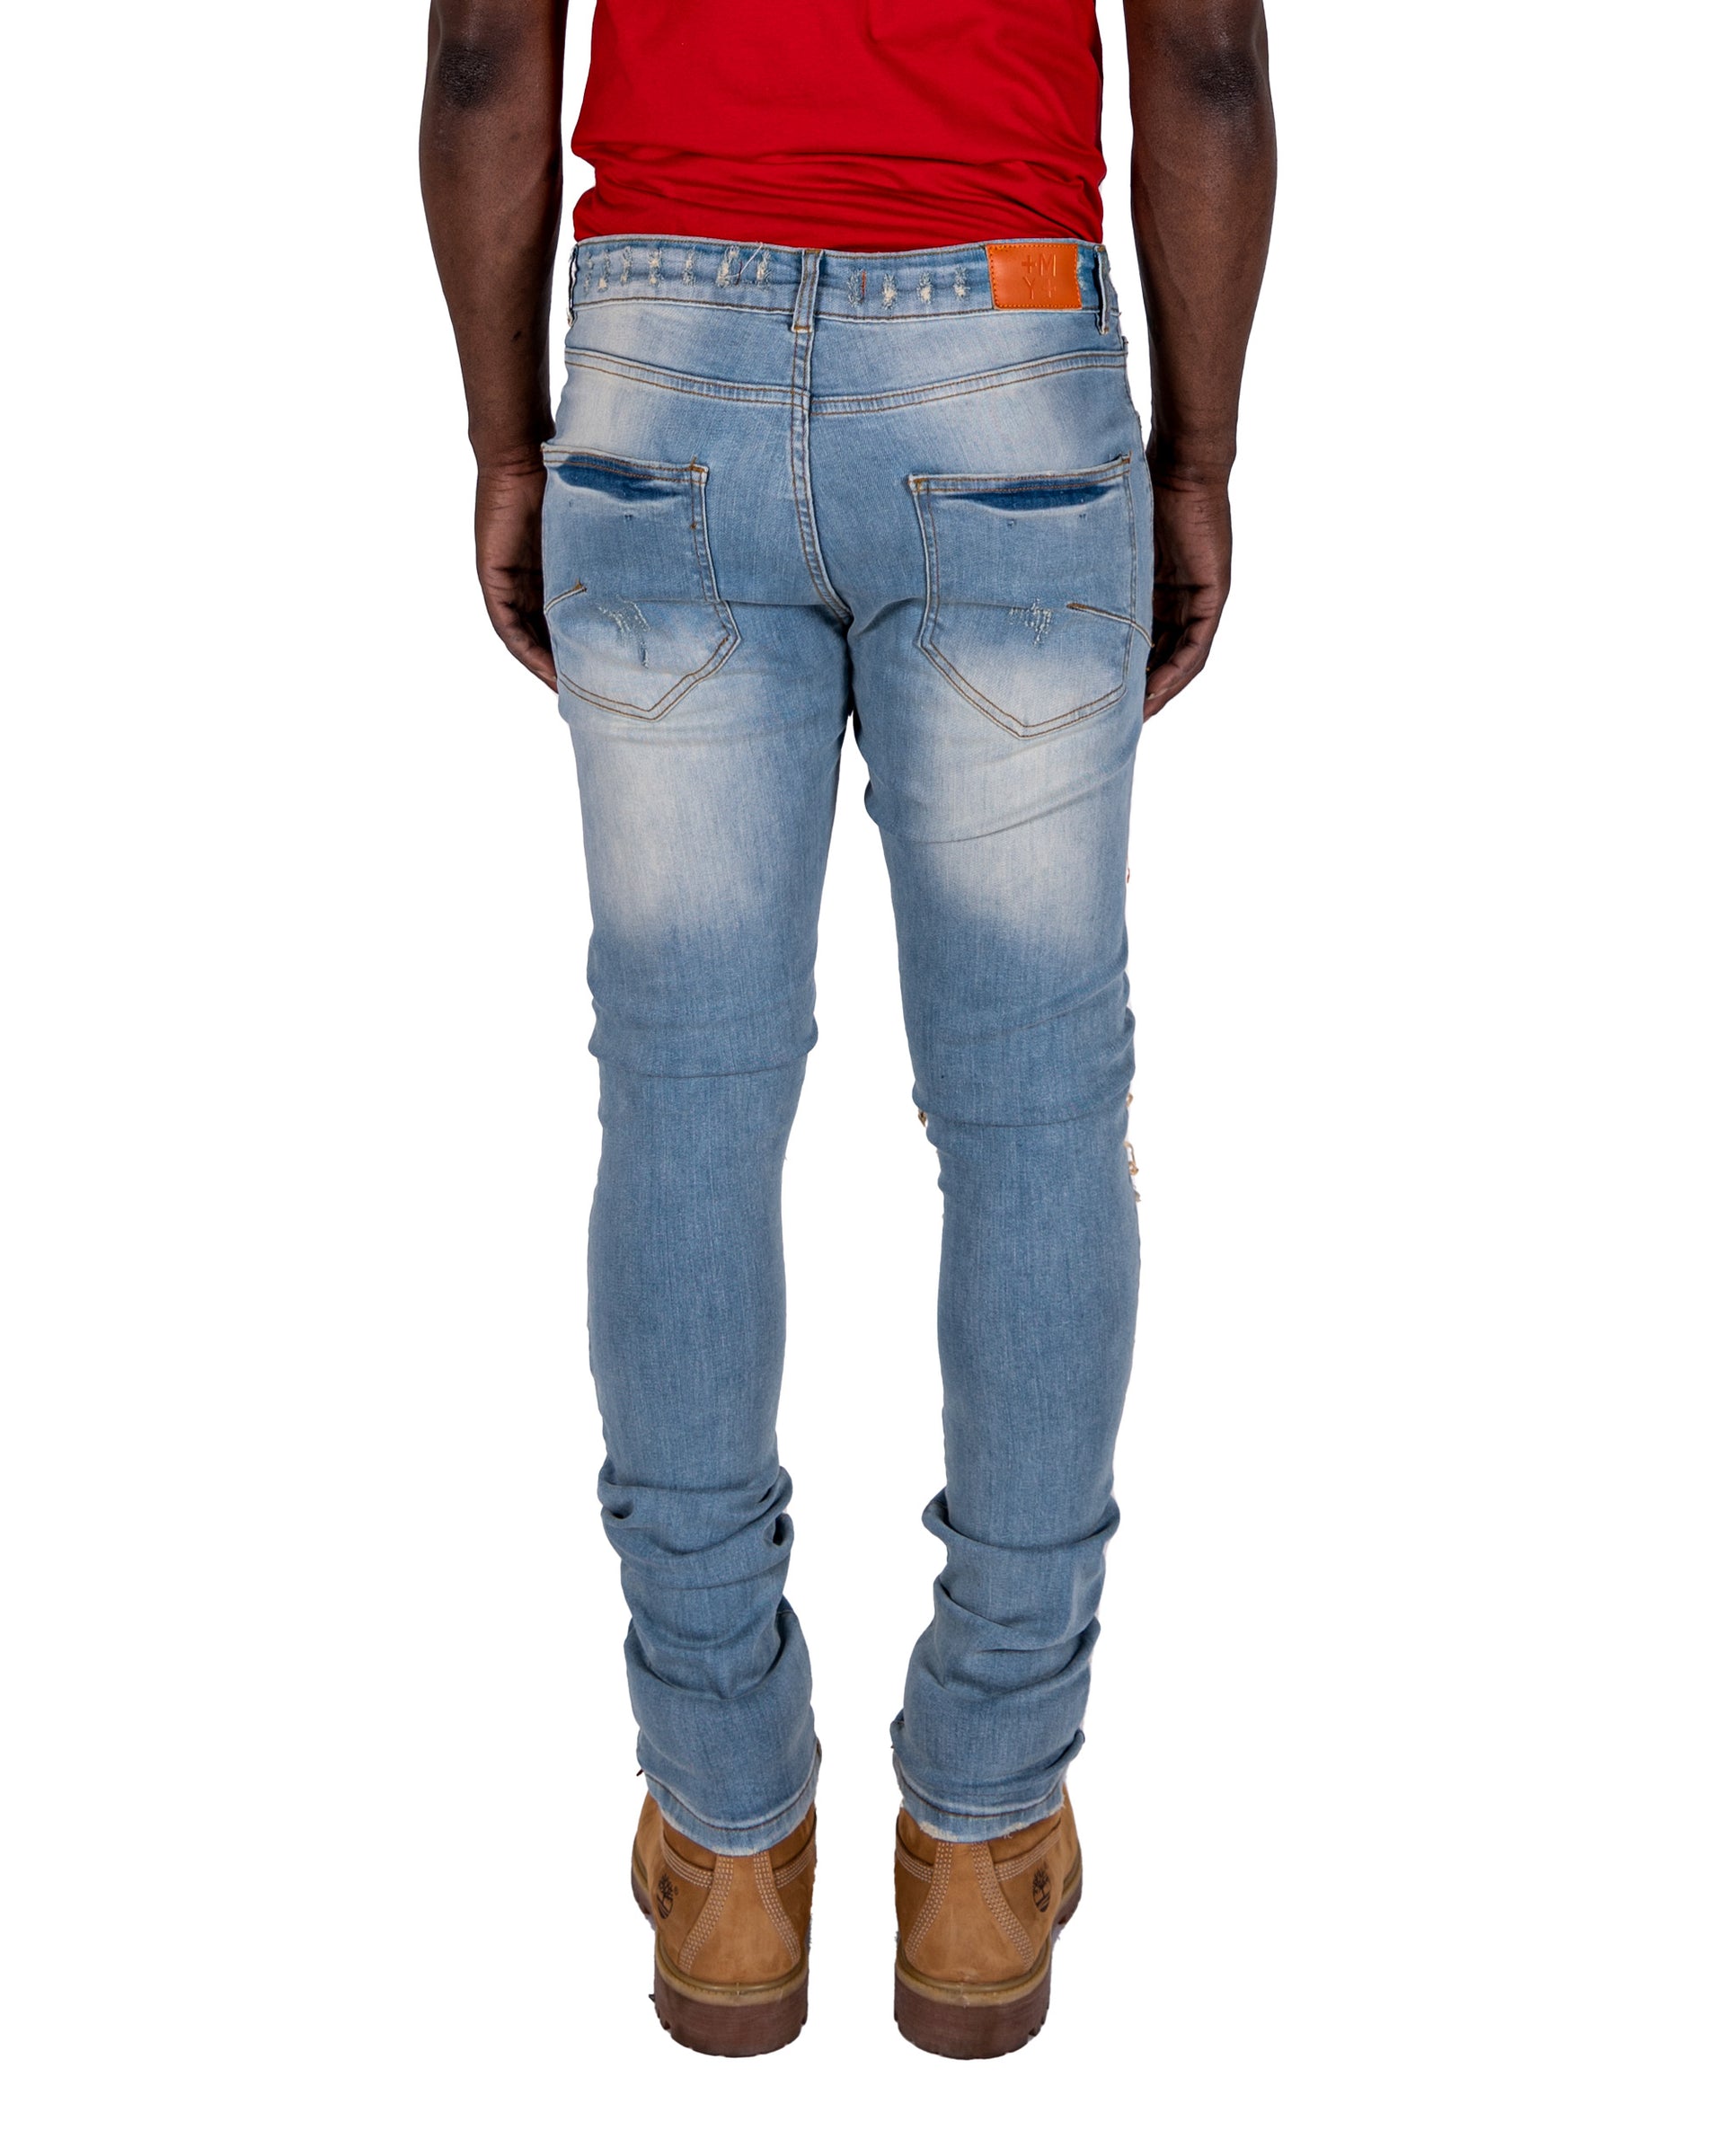 RANDOLPH | Men's Slim Skinny Shredded Rip & Repair Denim Jeans in Vintage